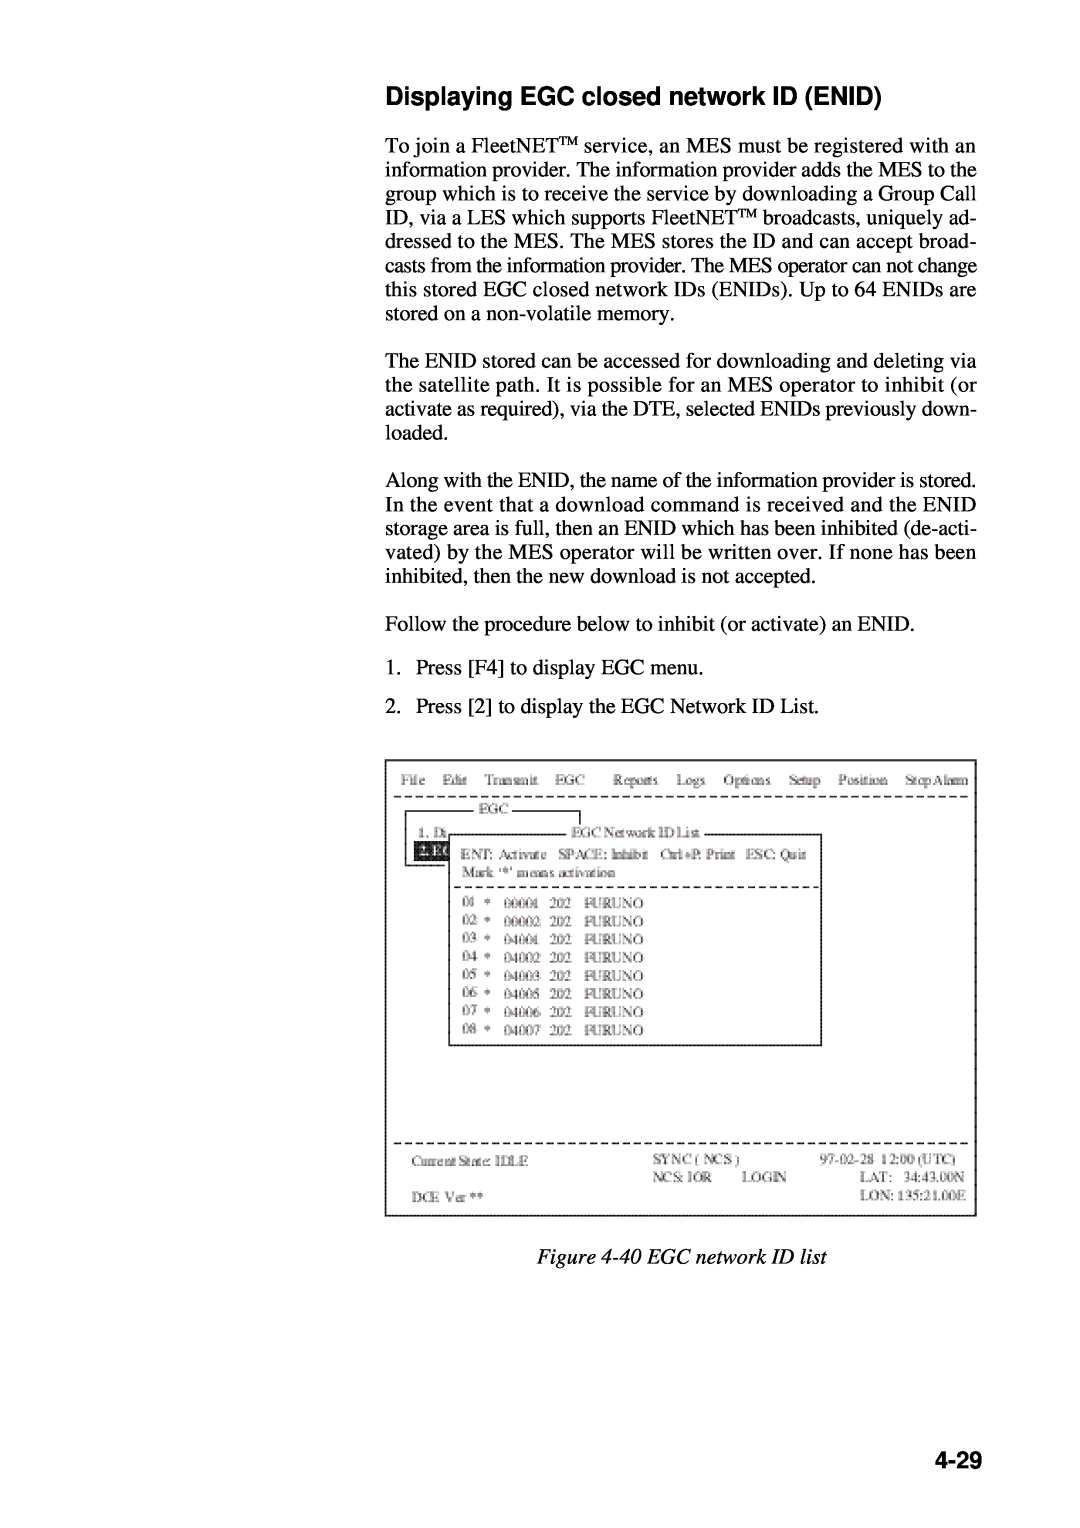 Furuno RC-1500-1T manual Displaying EGC closed network ID ENID, 4-29, 40 EGC network ID list 